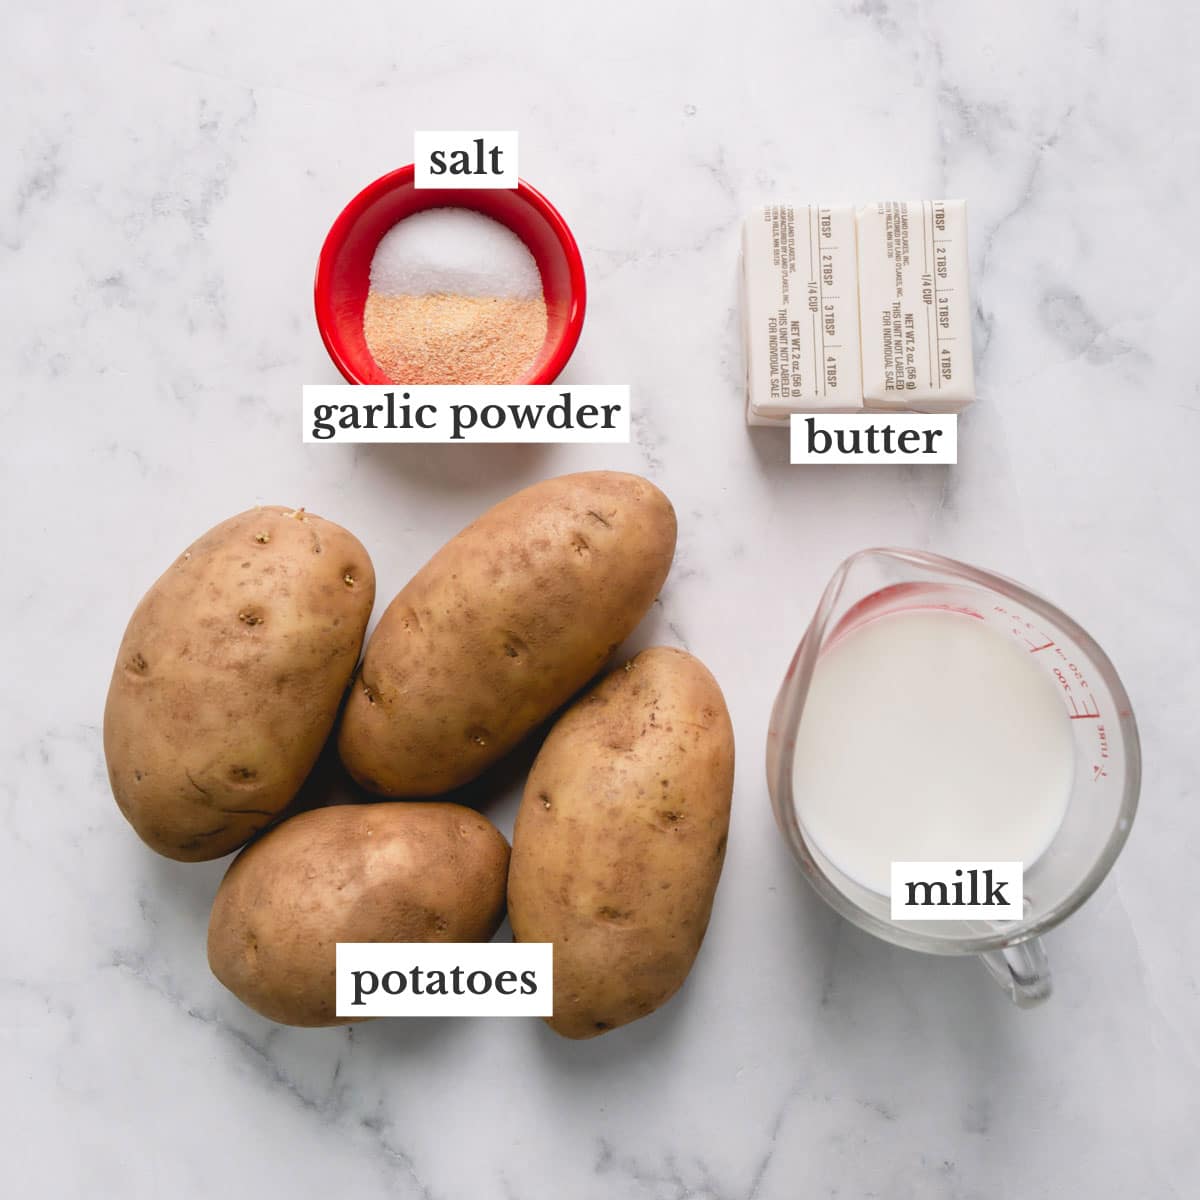 Potatoes, salt, garlic powder, butter, and milk to make brown butter mashed potatoes.